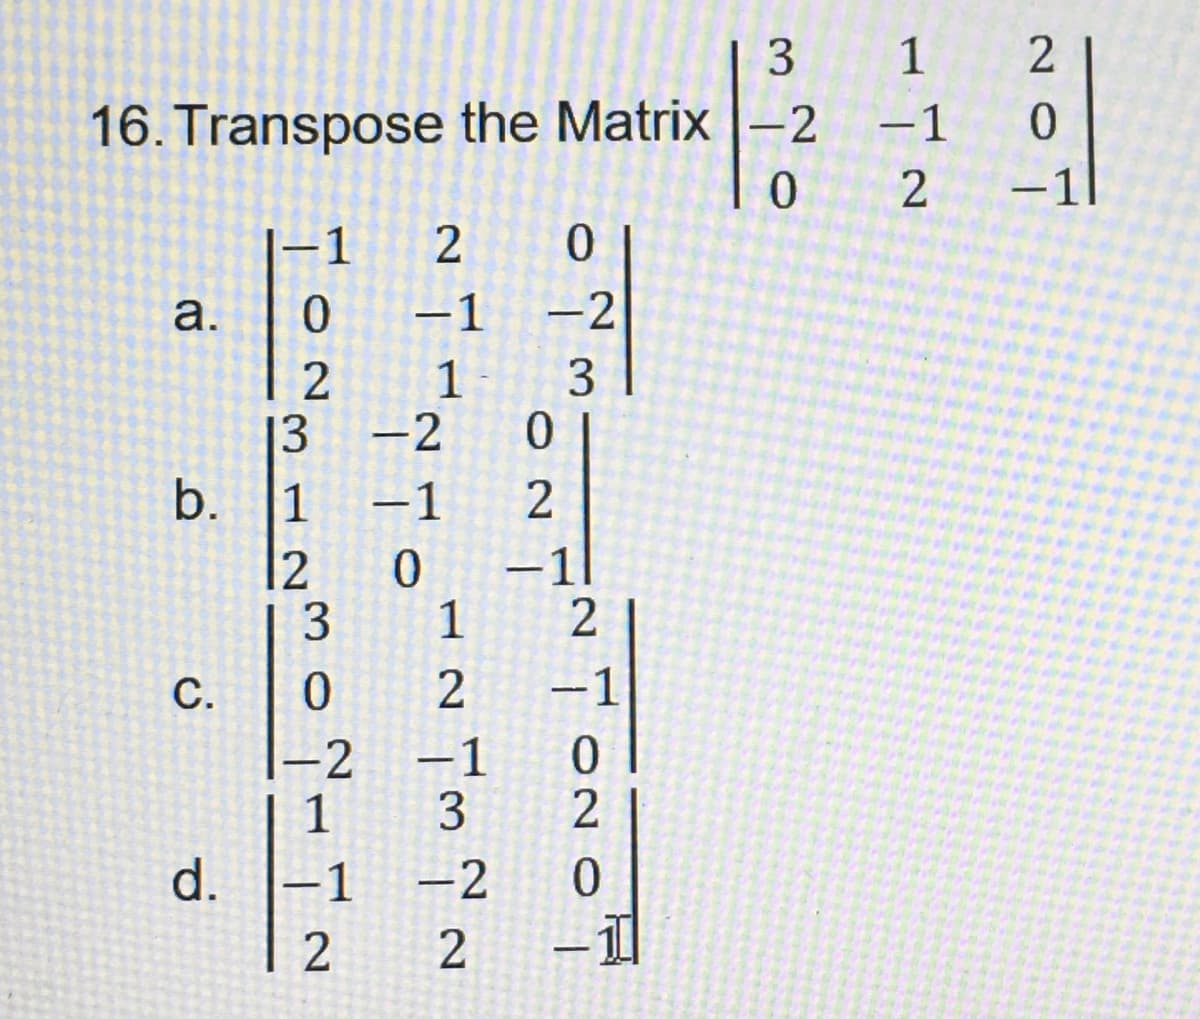 3
16. Transpose the Matrix-2
a.
b.
C.
d.
TONO
13
12
2
3
0
1-2
1
-1
2
2
-1
1
-2
-1
0
1
2
-1
3
-2
2
0
-2
3
0
2
-11
2
-1
0
2
0
-1
0
1
-1
2
NOT